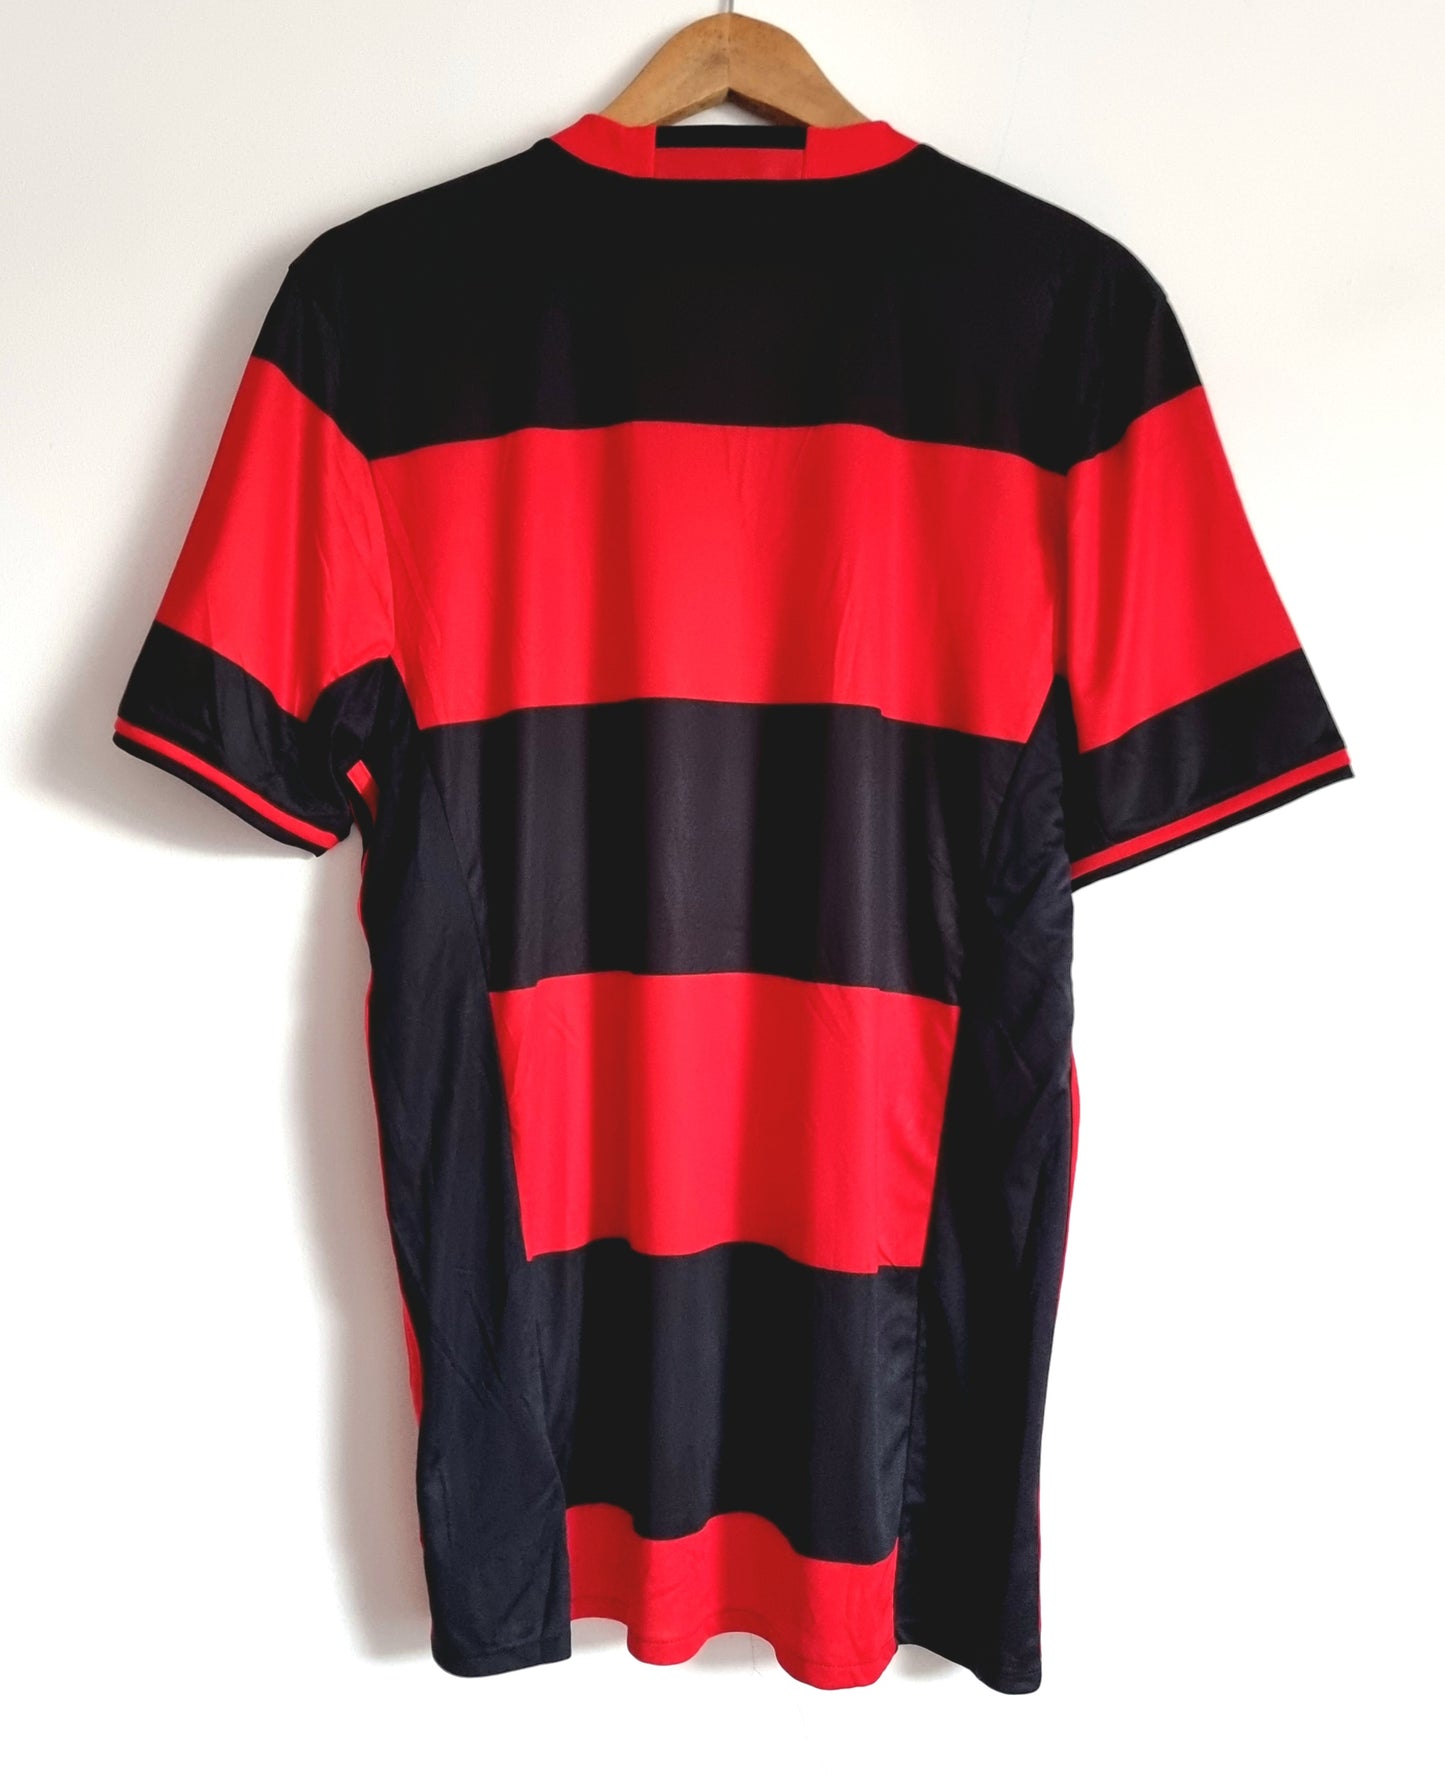 Adidas Flamengo 16/17 Home Shirt Large